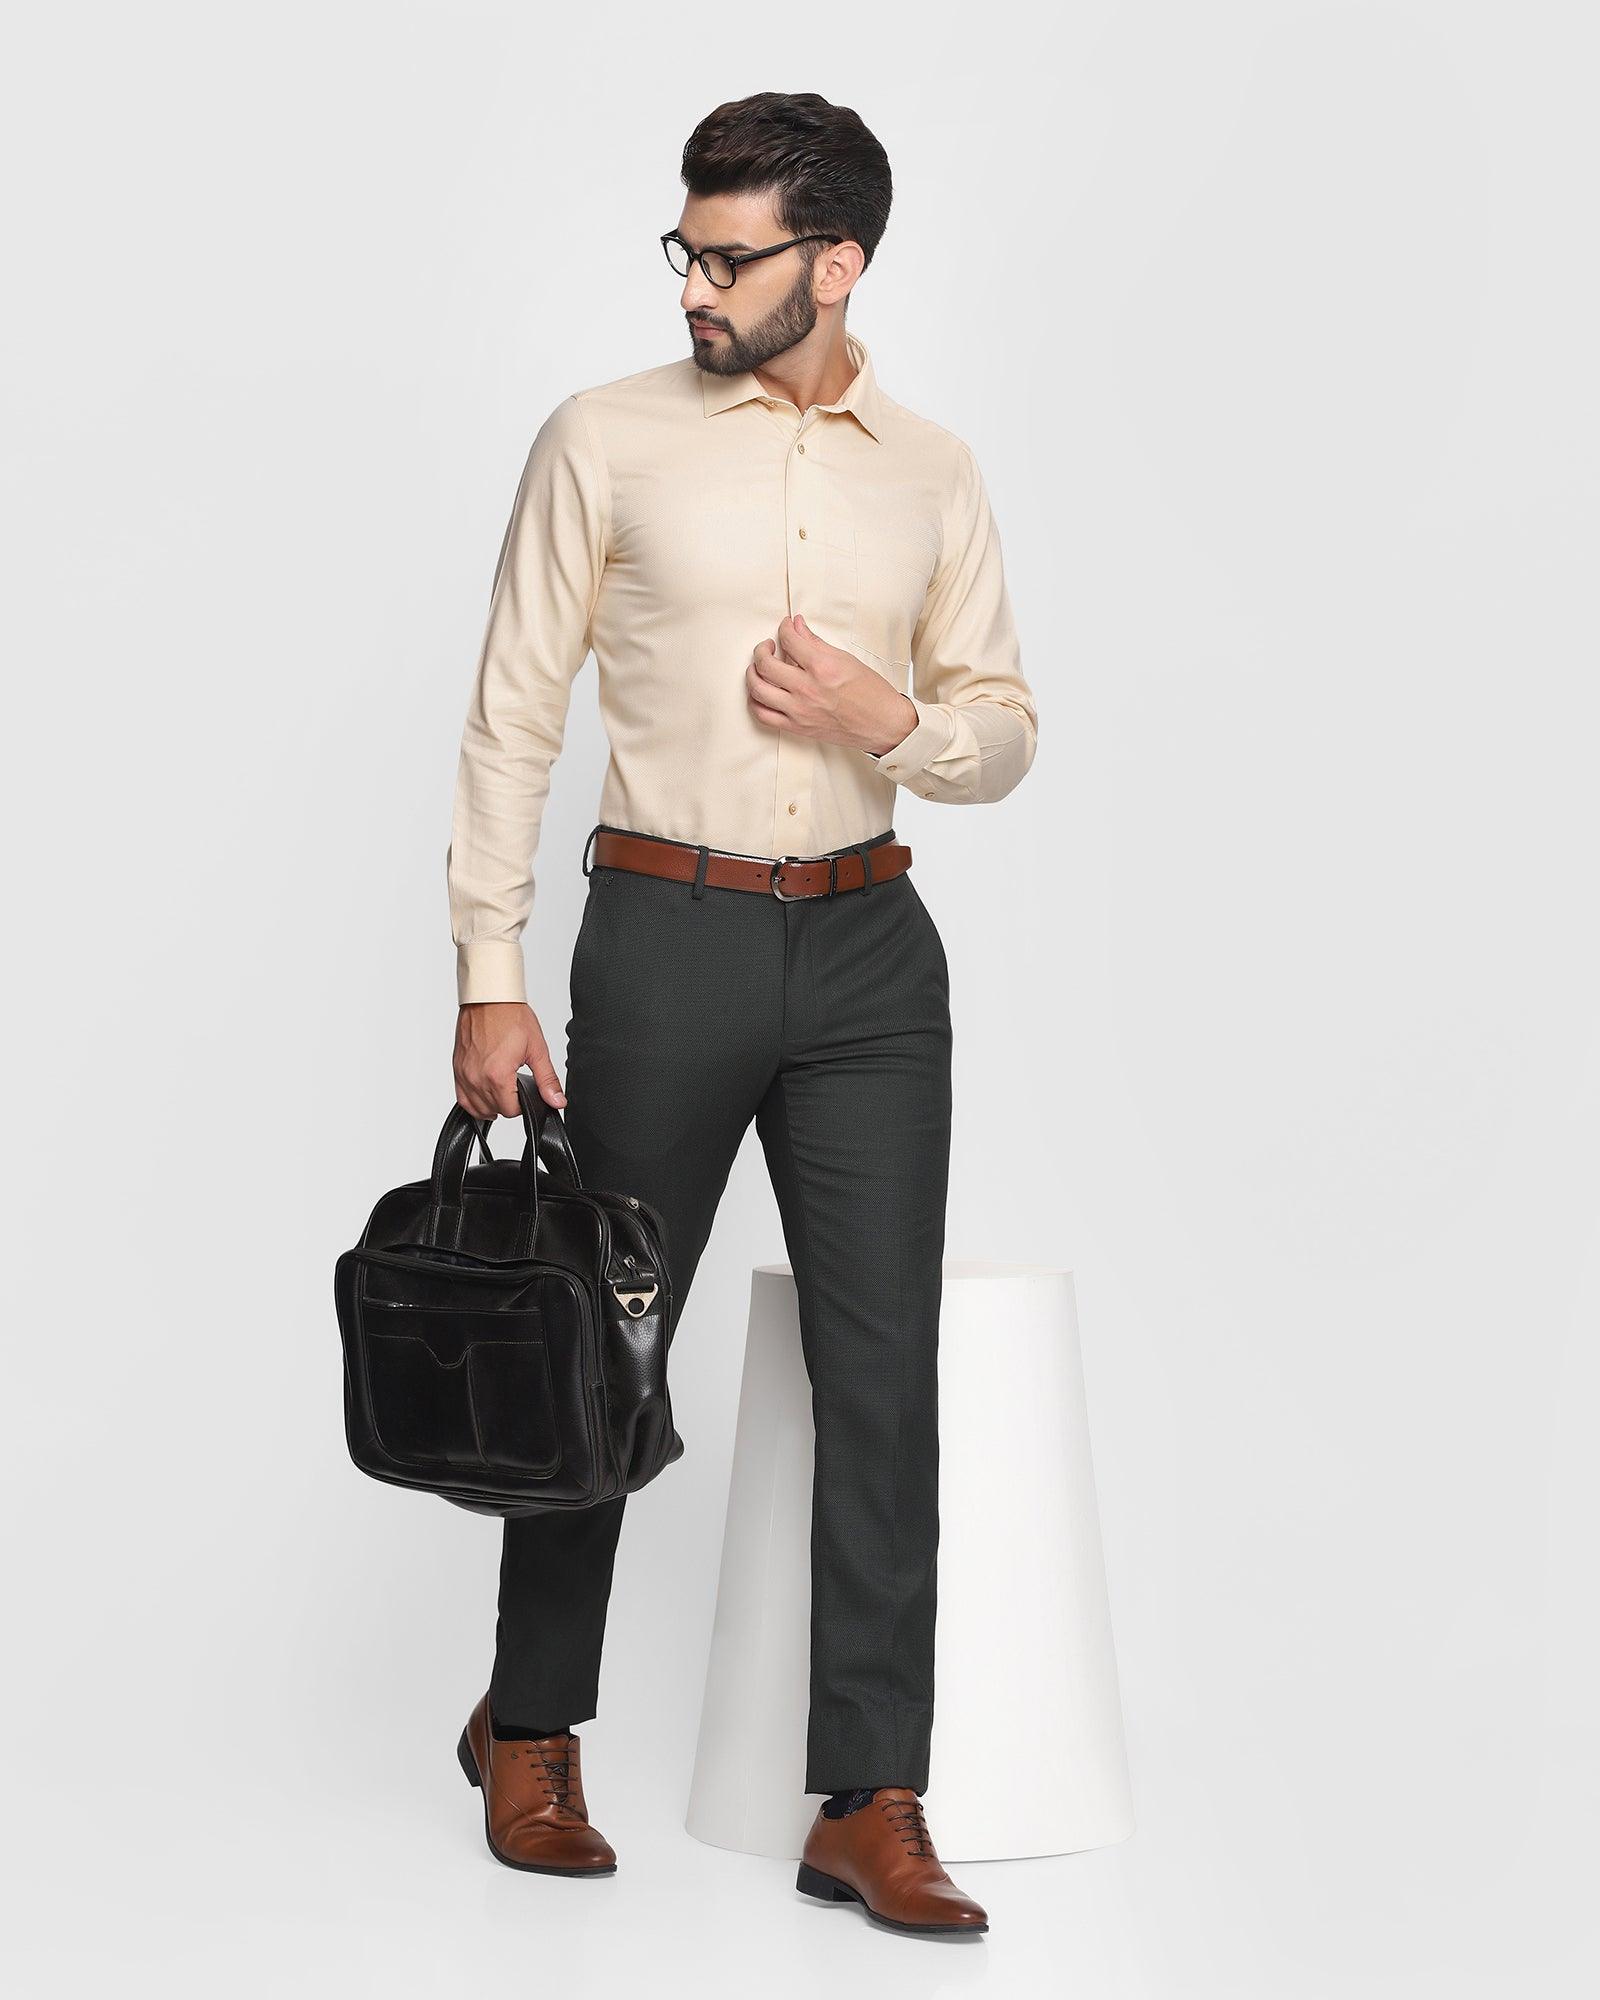 Dorado Brown Textured Premium Cotton Pant For Men